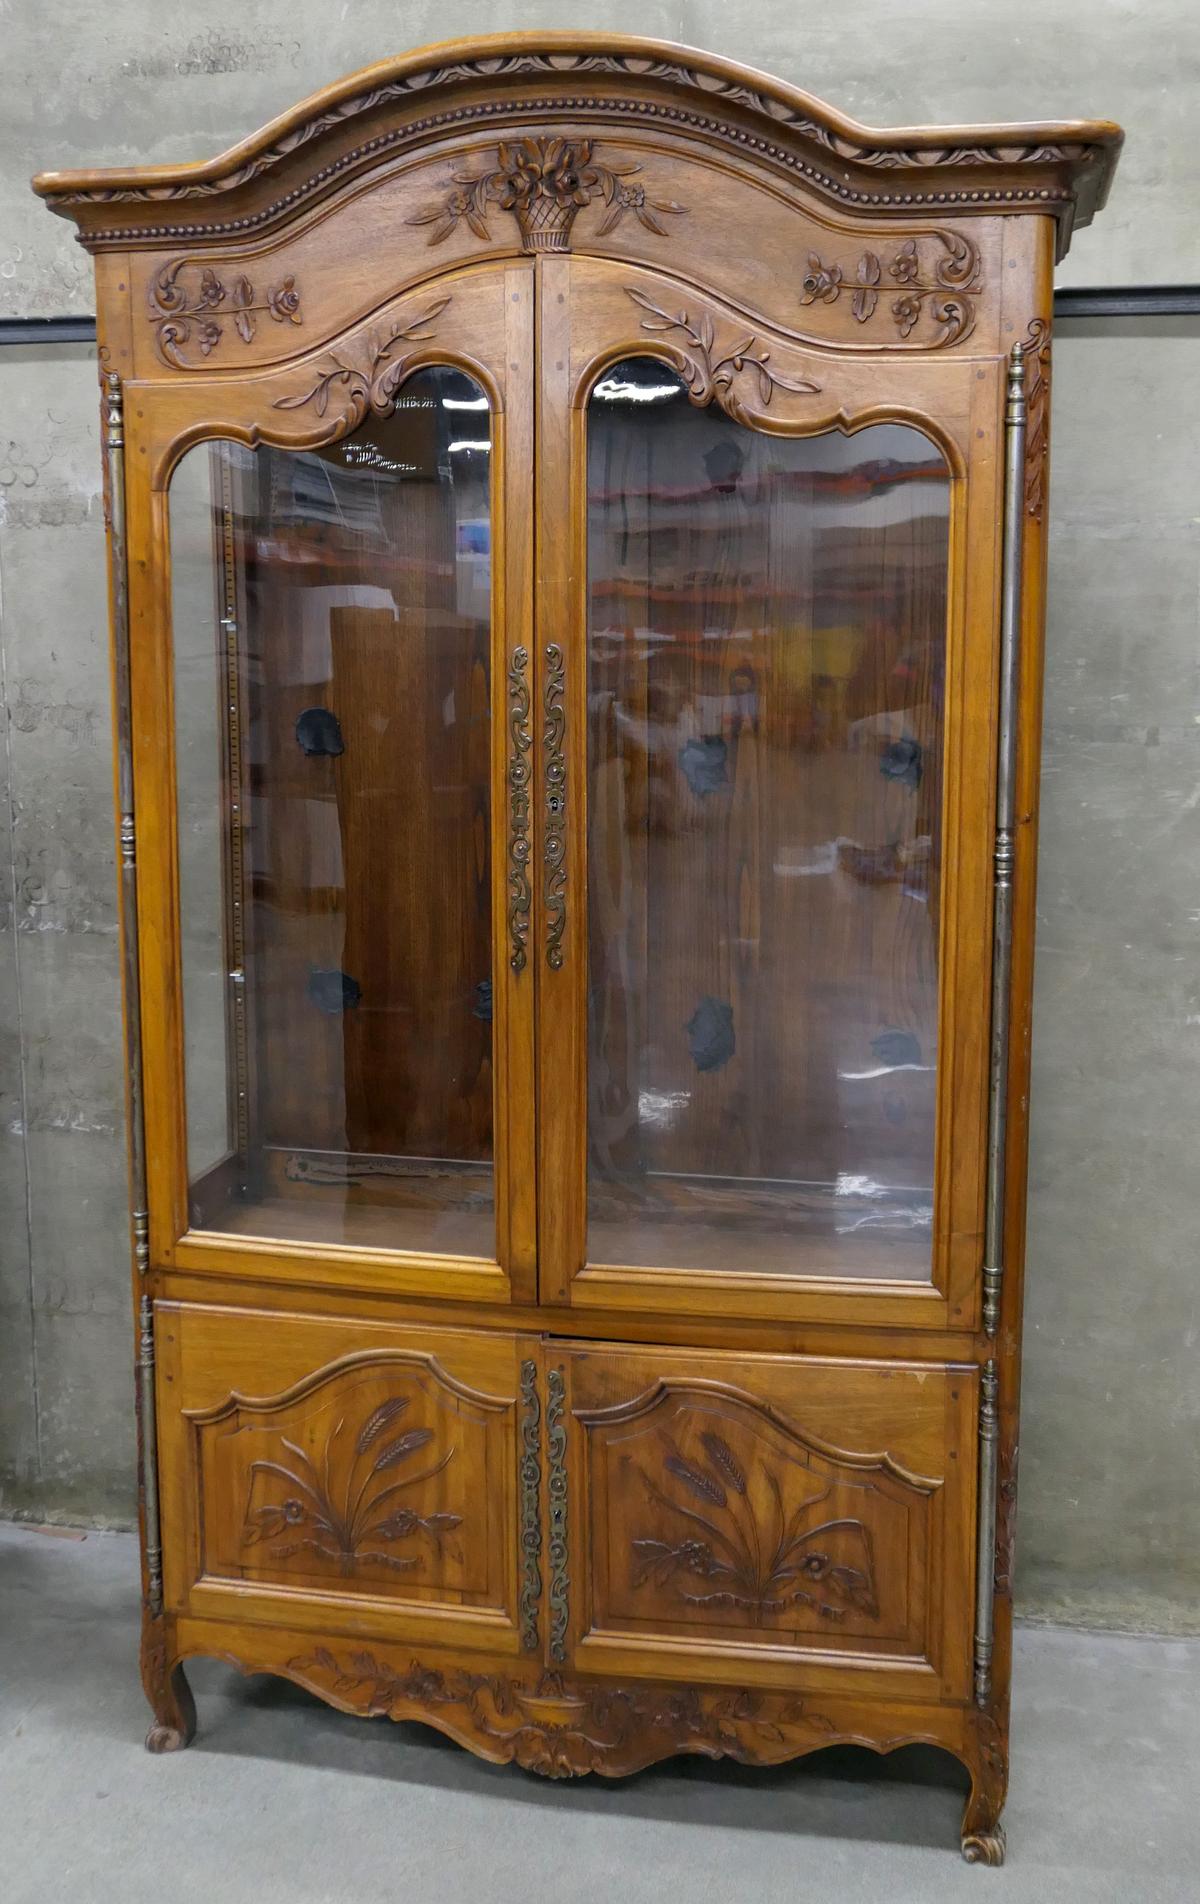 LOT 6: Illuminated Antique Wooden Cabinet